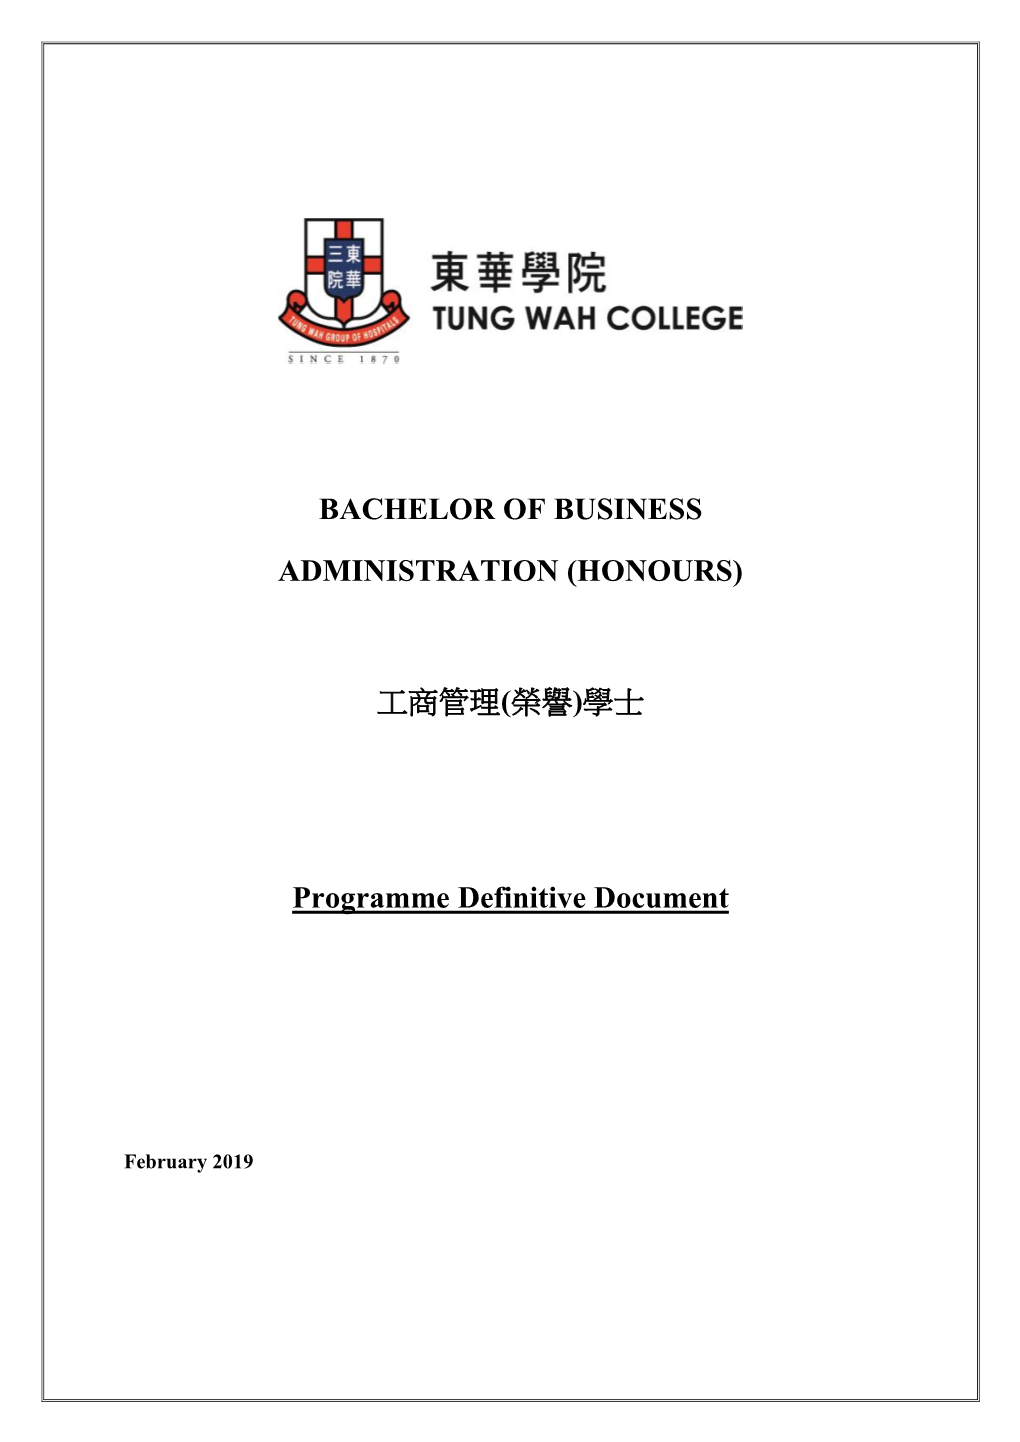 (HONOURS) 工商管理(榮譽)學士 Programme Definitive Document